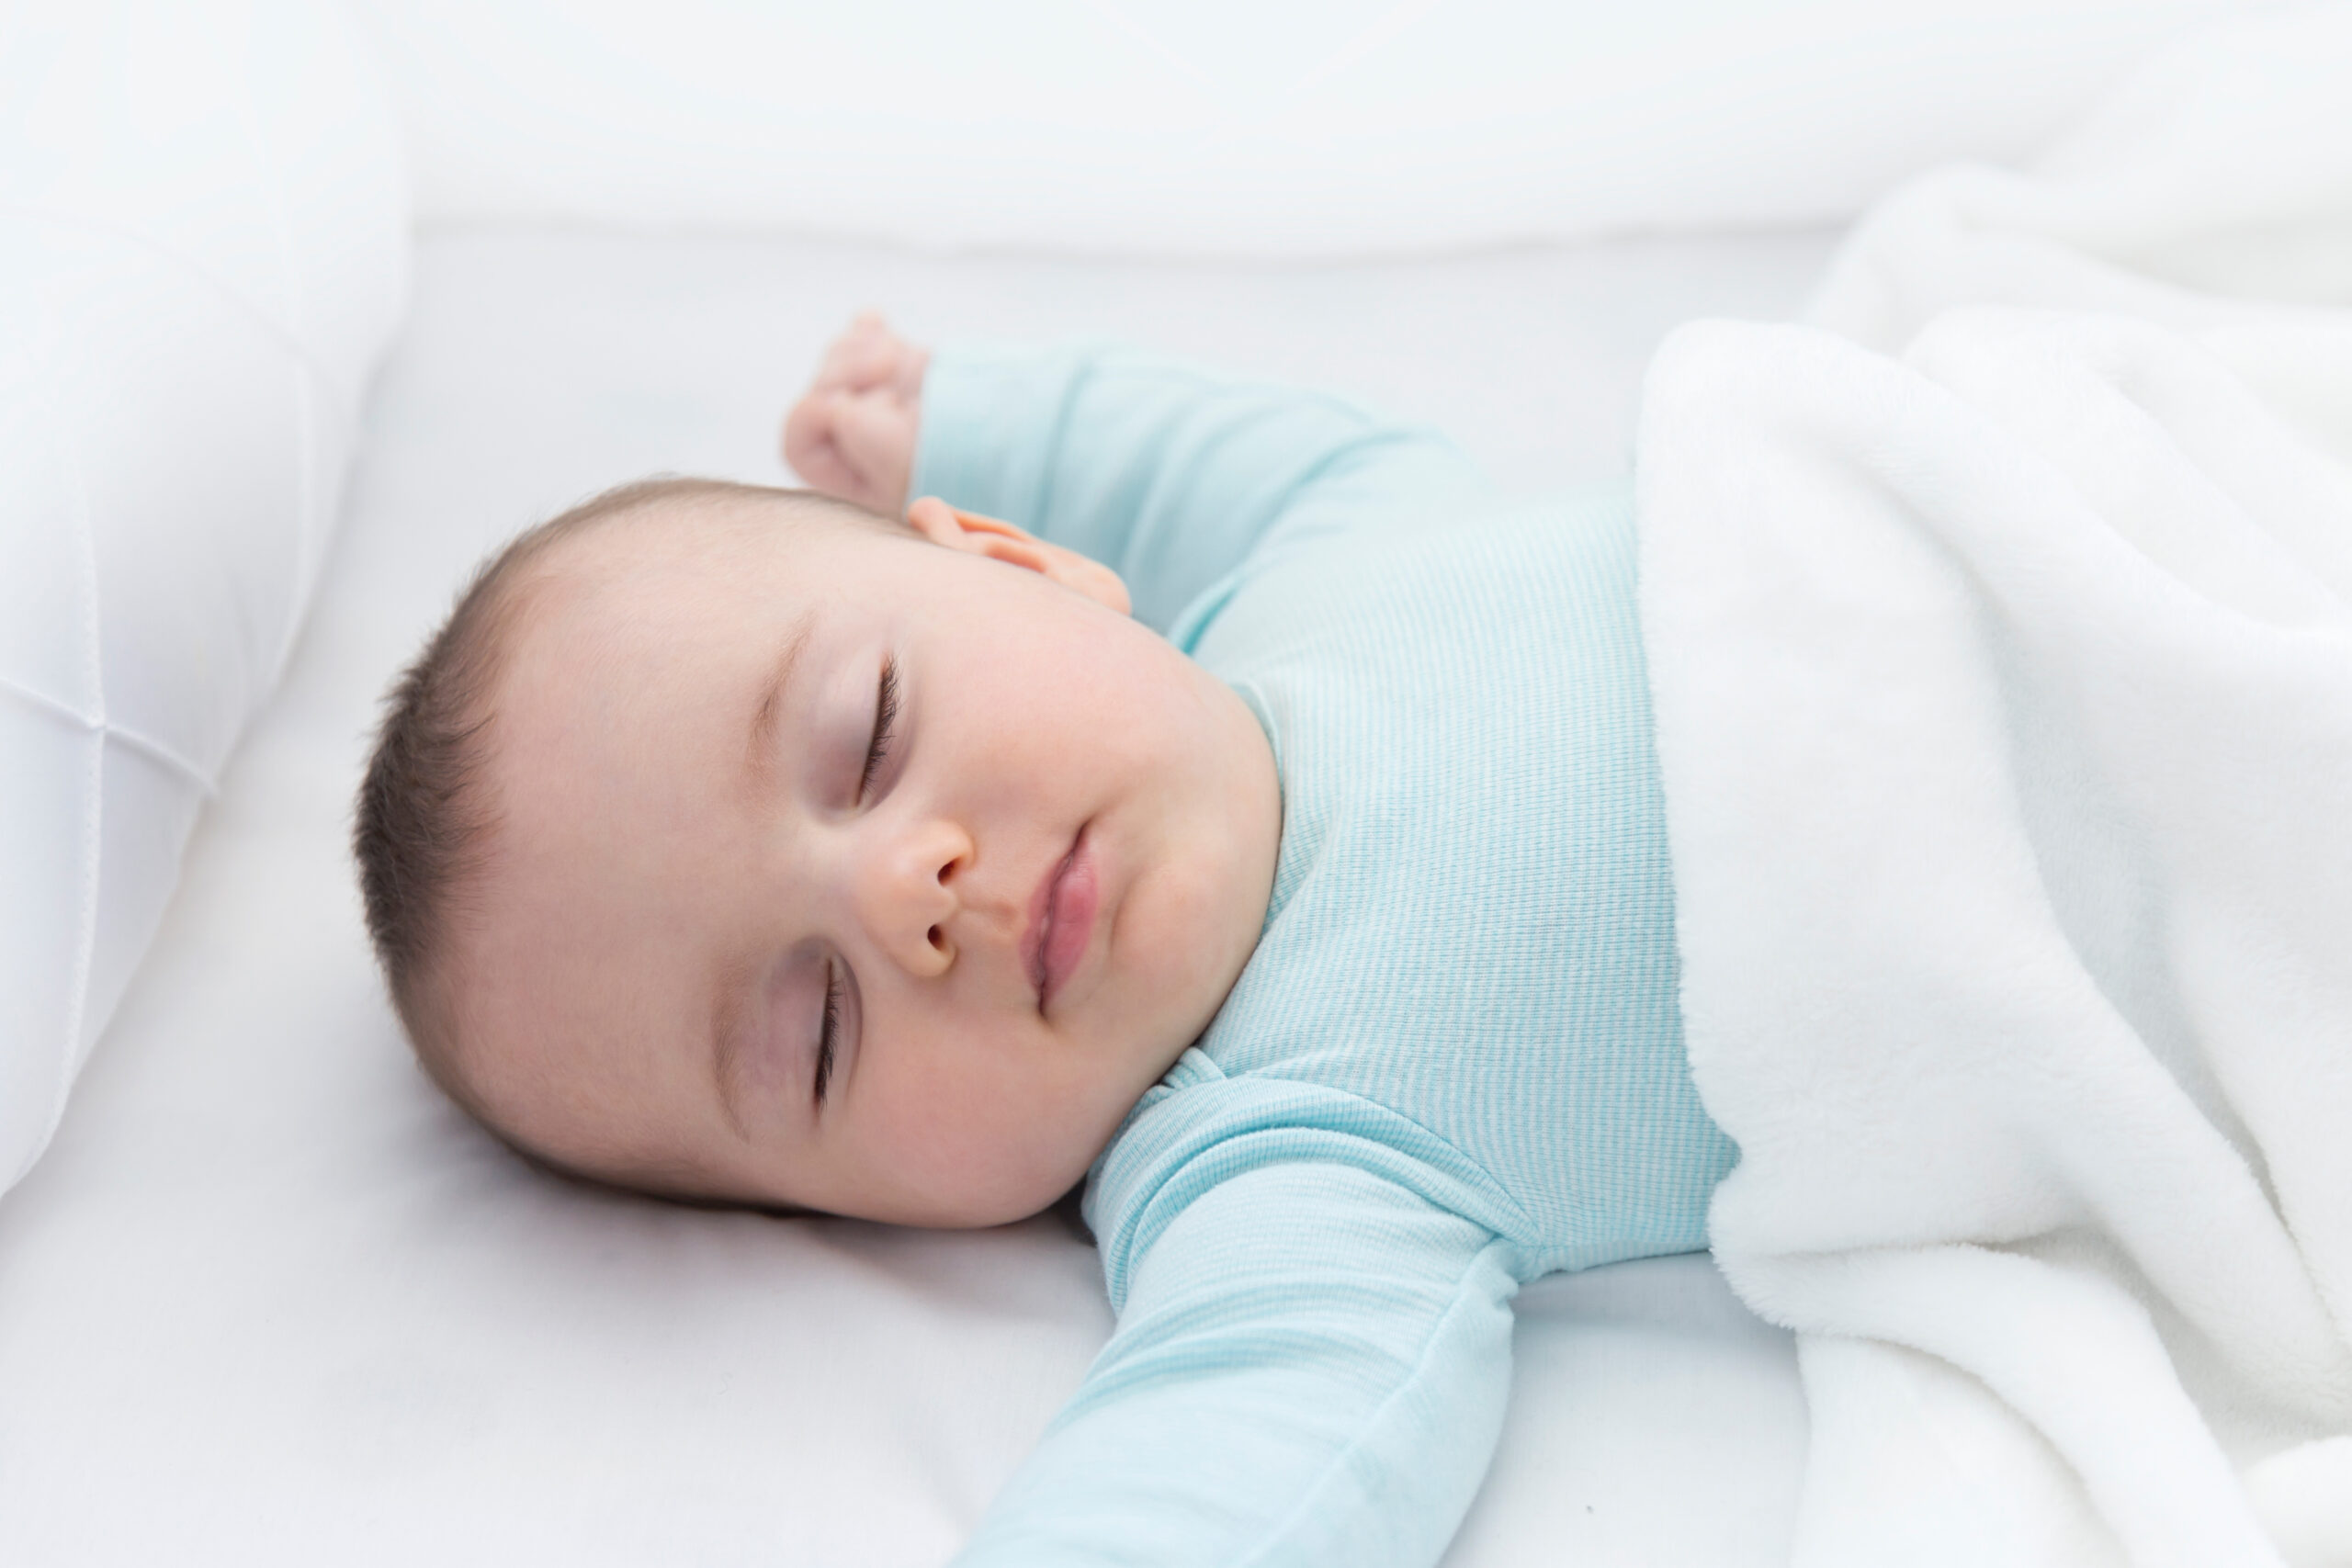 The Ferber Method of Sleep Training Explained